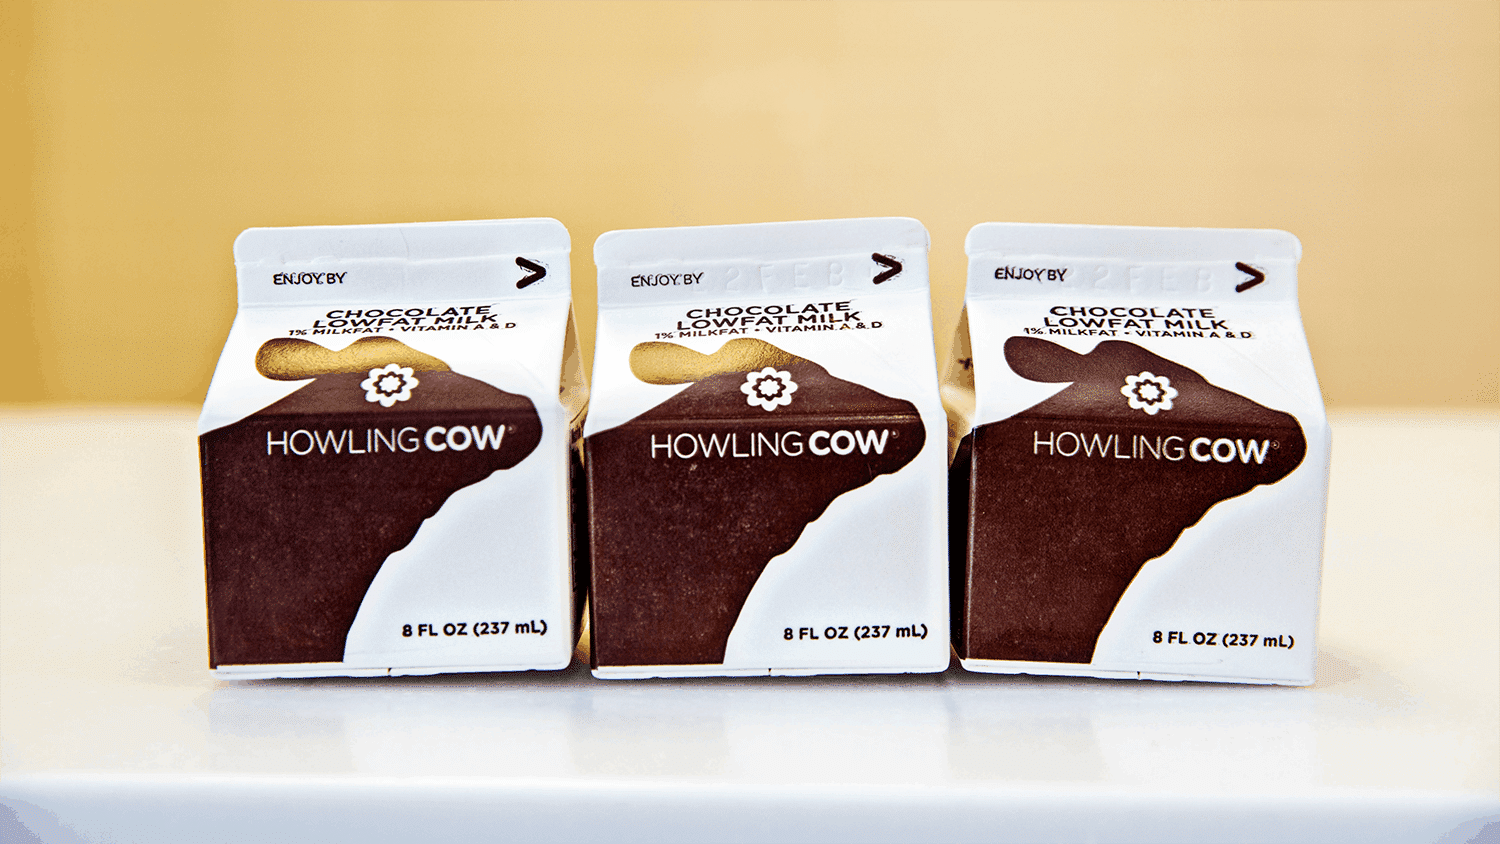 Three cartons of Howling Cow chocolate milk